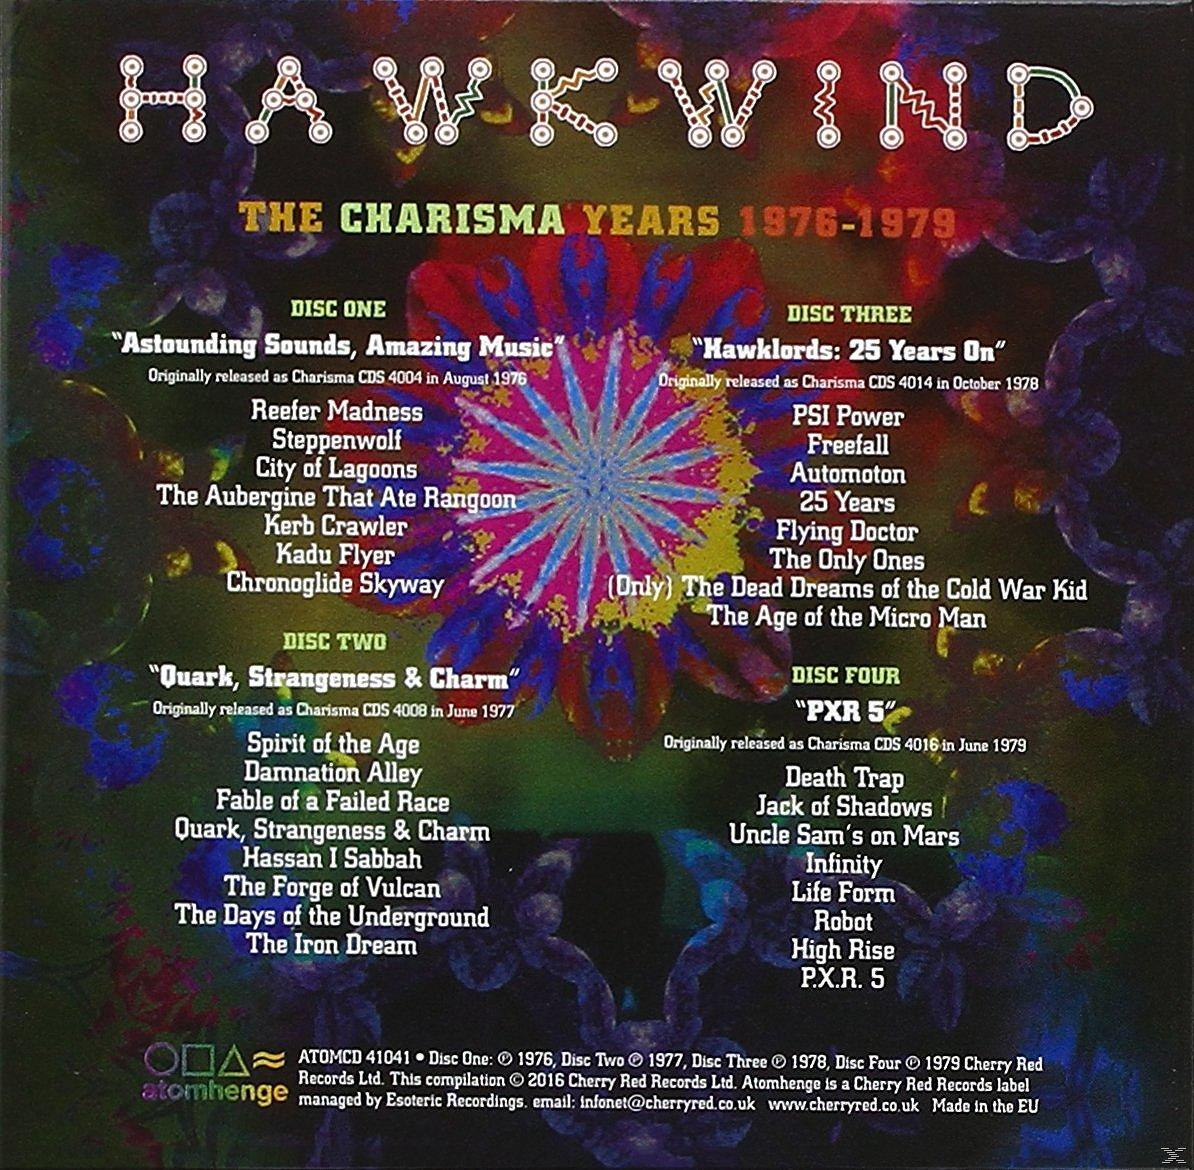 Box) (CD) 1976-1979 Charisma Hawkwind Clamshell Years - - (4CD